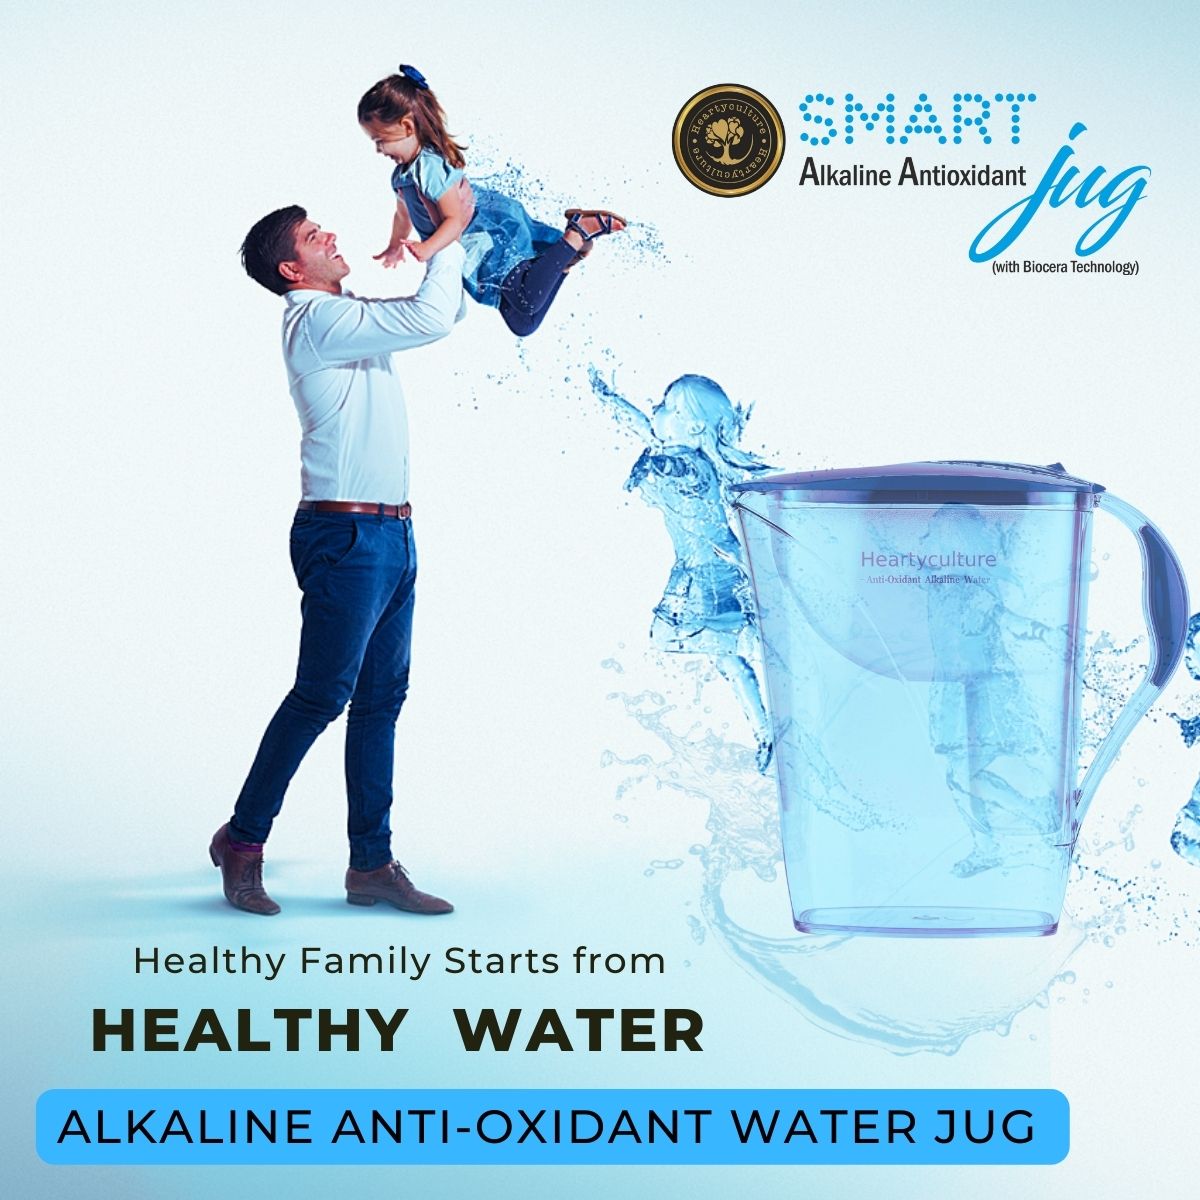 Heartyculture's Smart (Antioxidant Alkaline) Jug - hfnl!fe